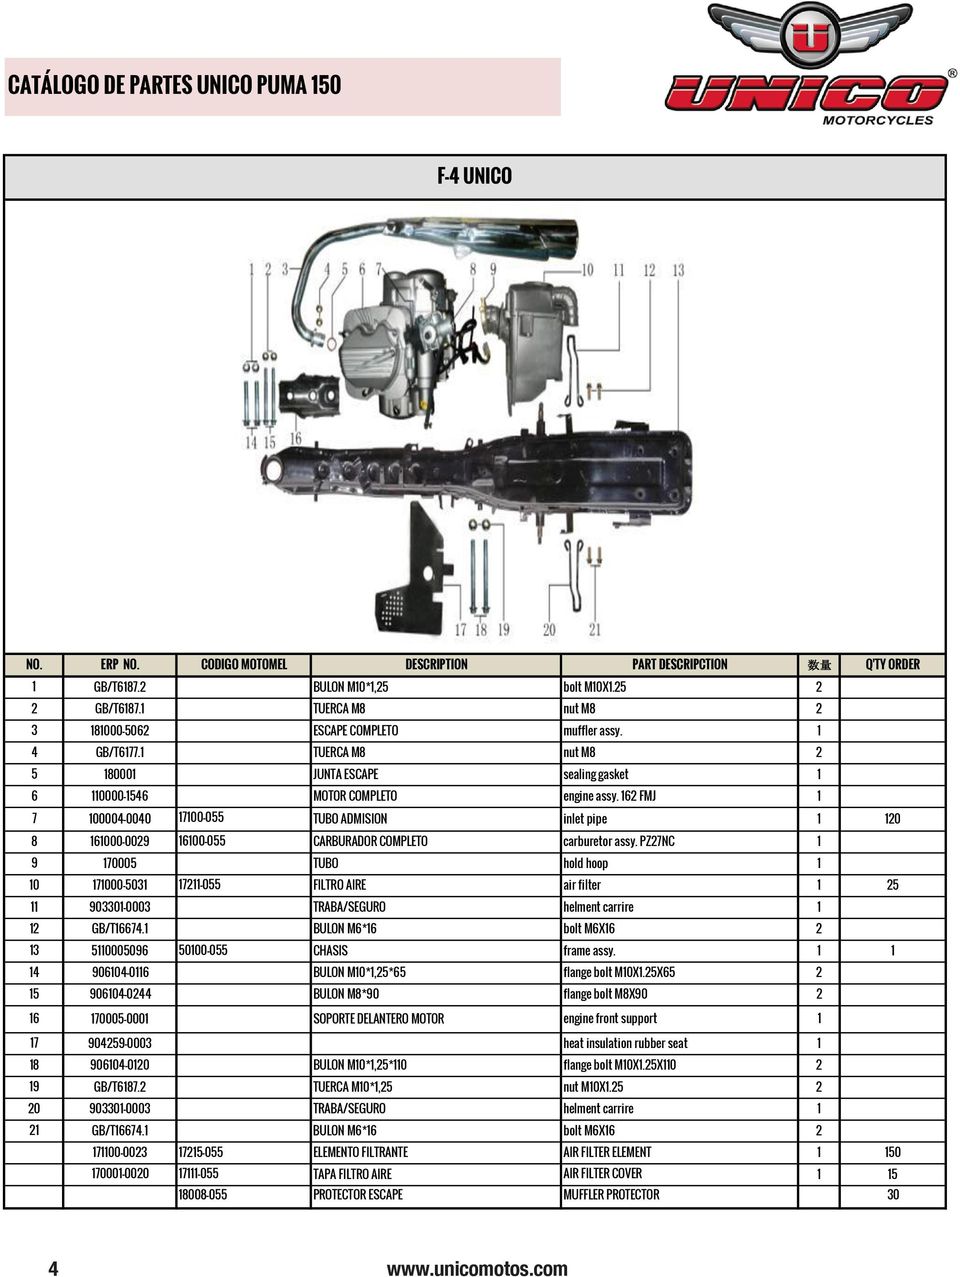 162 FMJ 1 7 100004-0040 17100-055 TUBO ADMISION inlet pipe 1 120 8 161000-0029 16100-055 CARBURADOR COMPLETO carburetor assy.